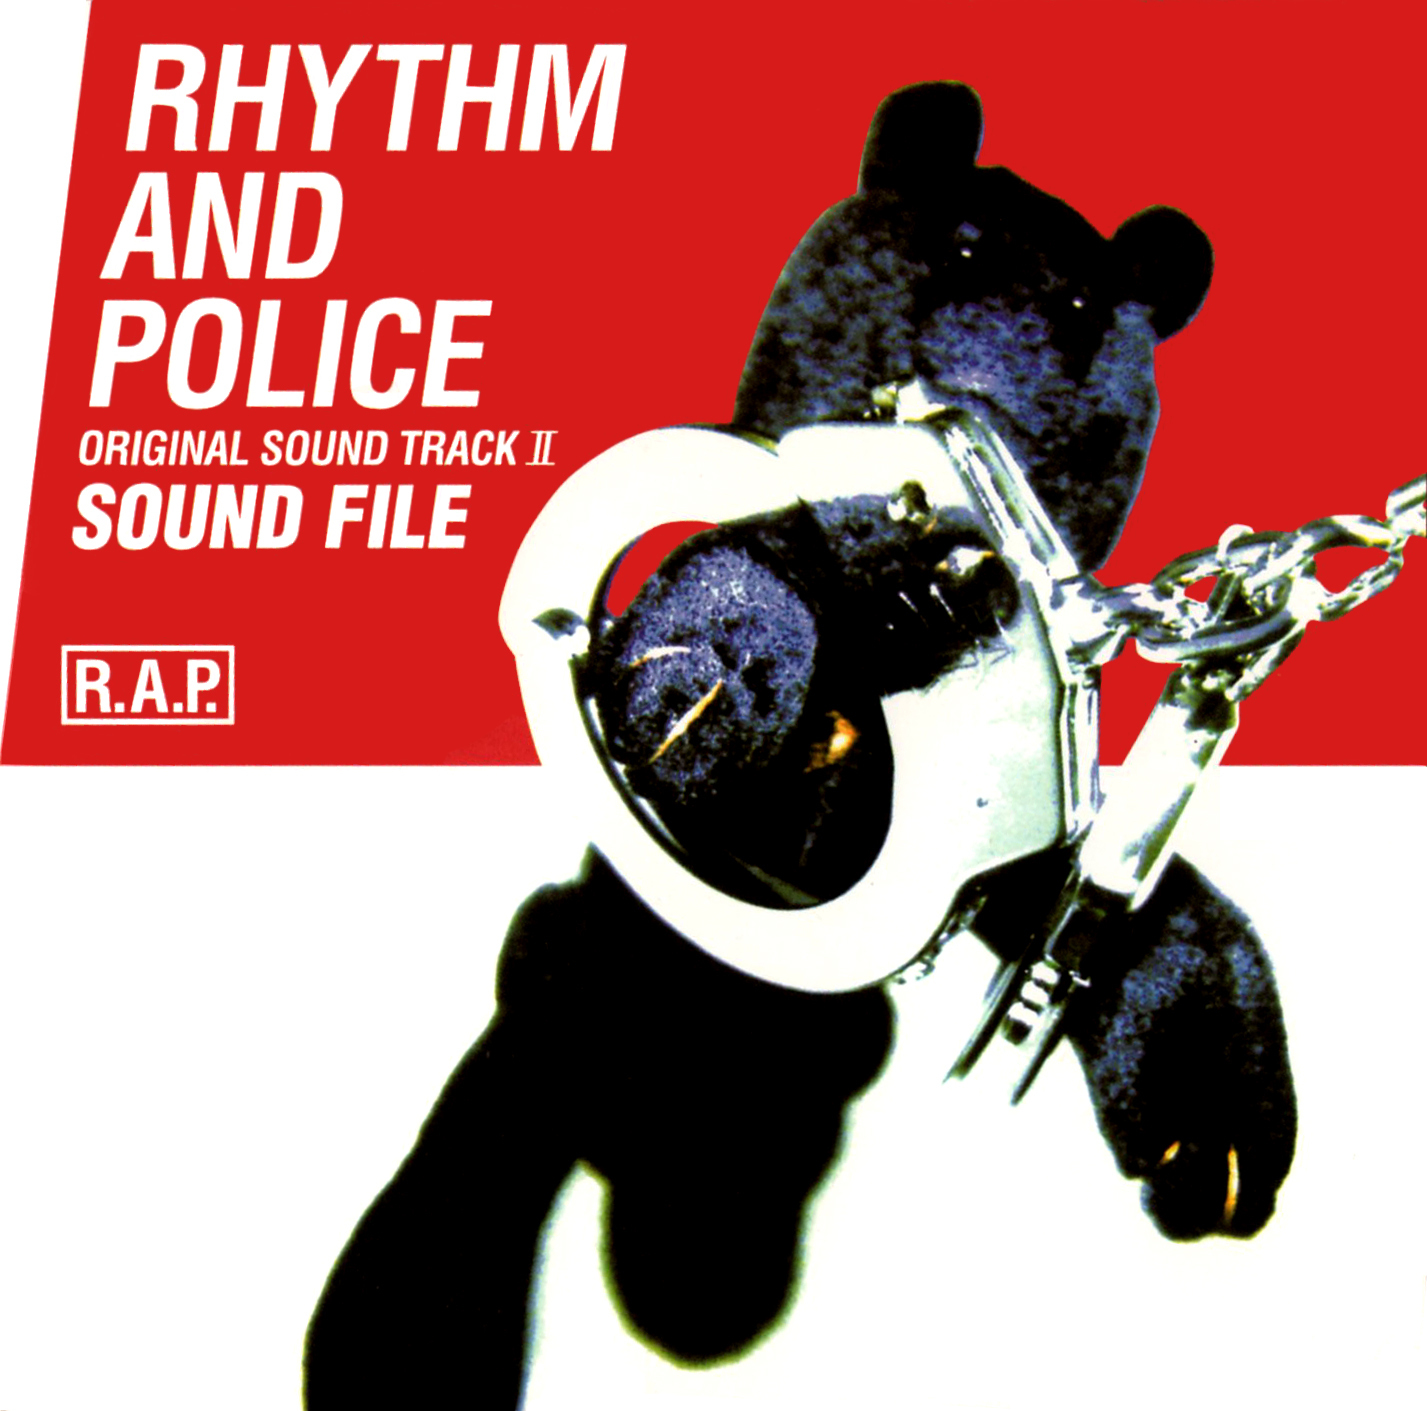 F.F.S.S. ( FUTURE FUNK SOUND SYSTEM)『踊る大捜査線 オリジナル・サウンドトラックII (RHYTHM AND POLICE R.A.P. ORIGINAL SOUND TRACK II SOUND FILE)』(1997年3月26日発売) 高画質CDジャケット画像